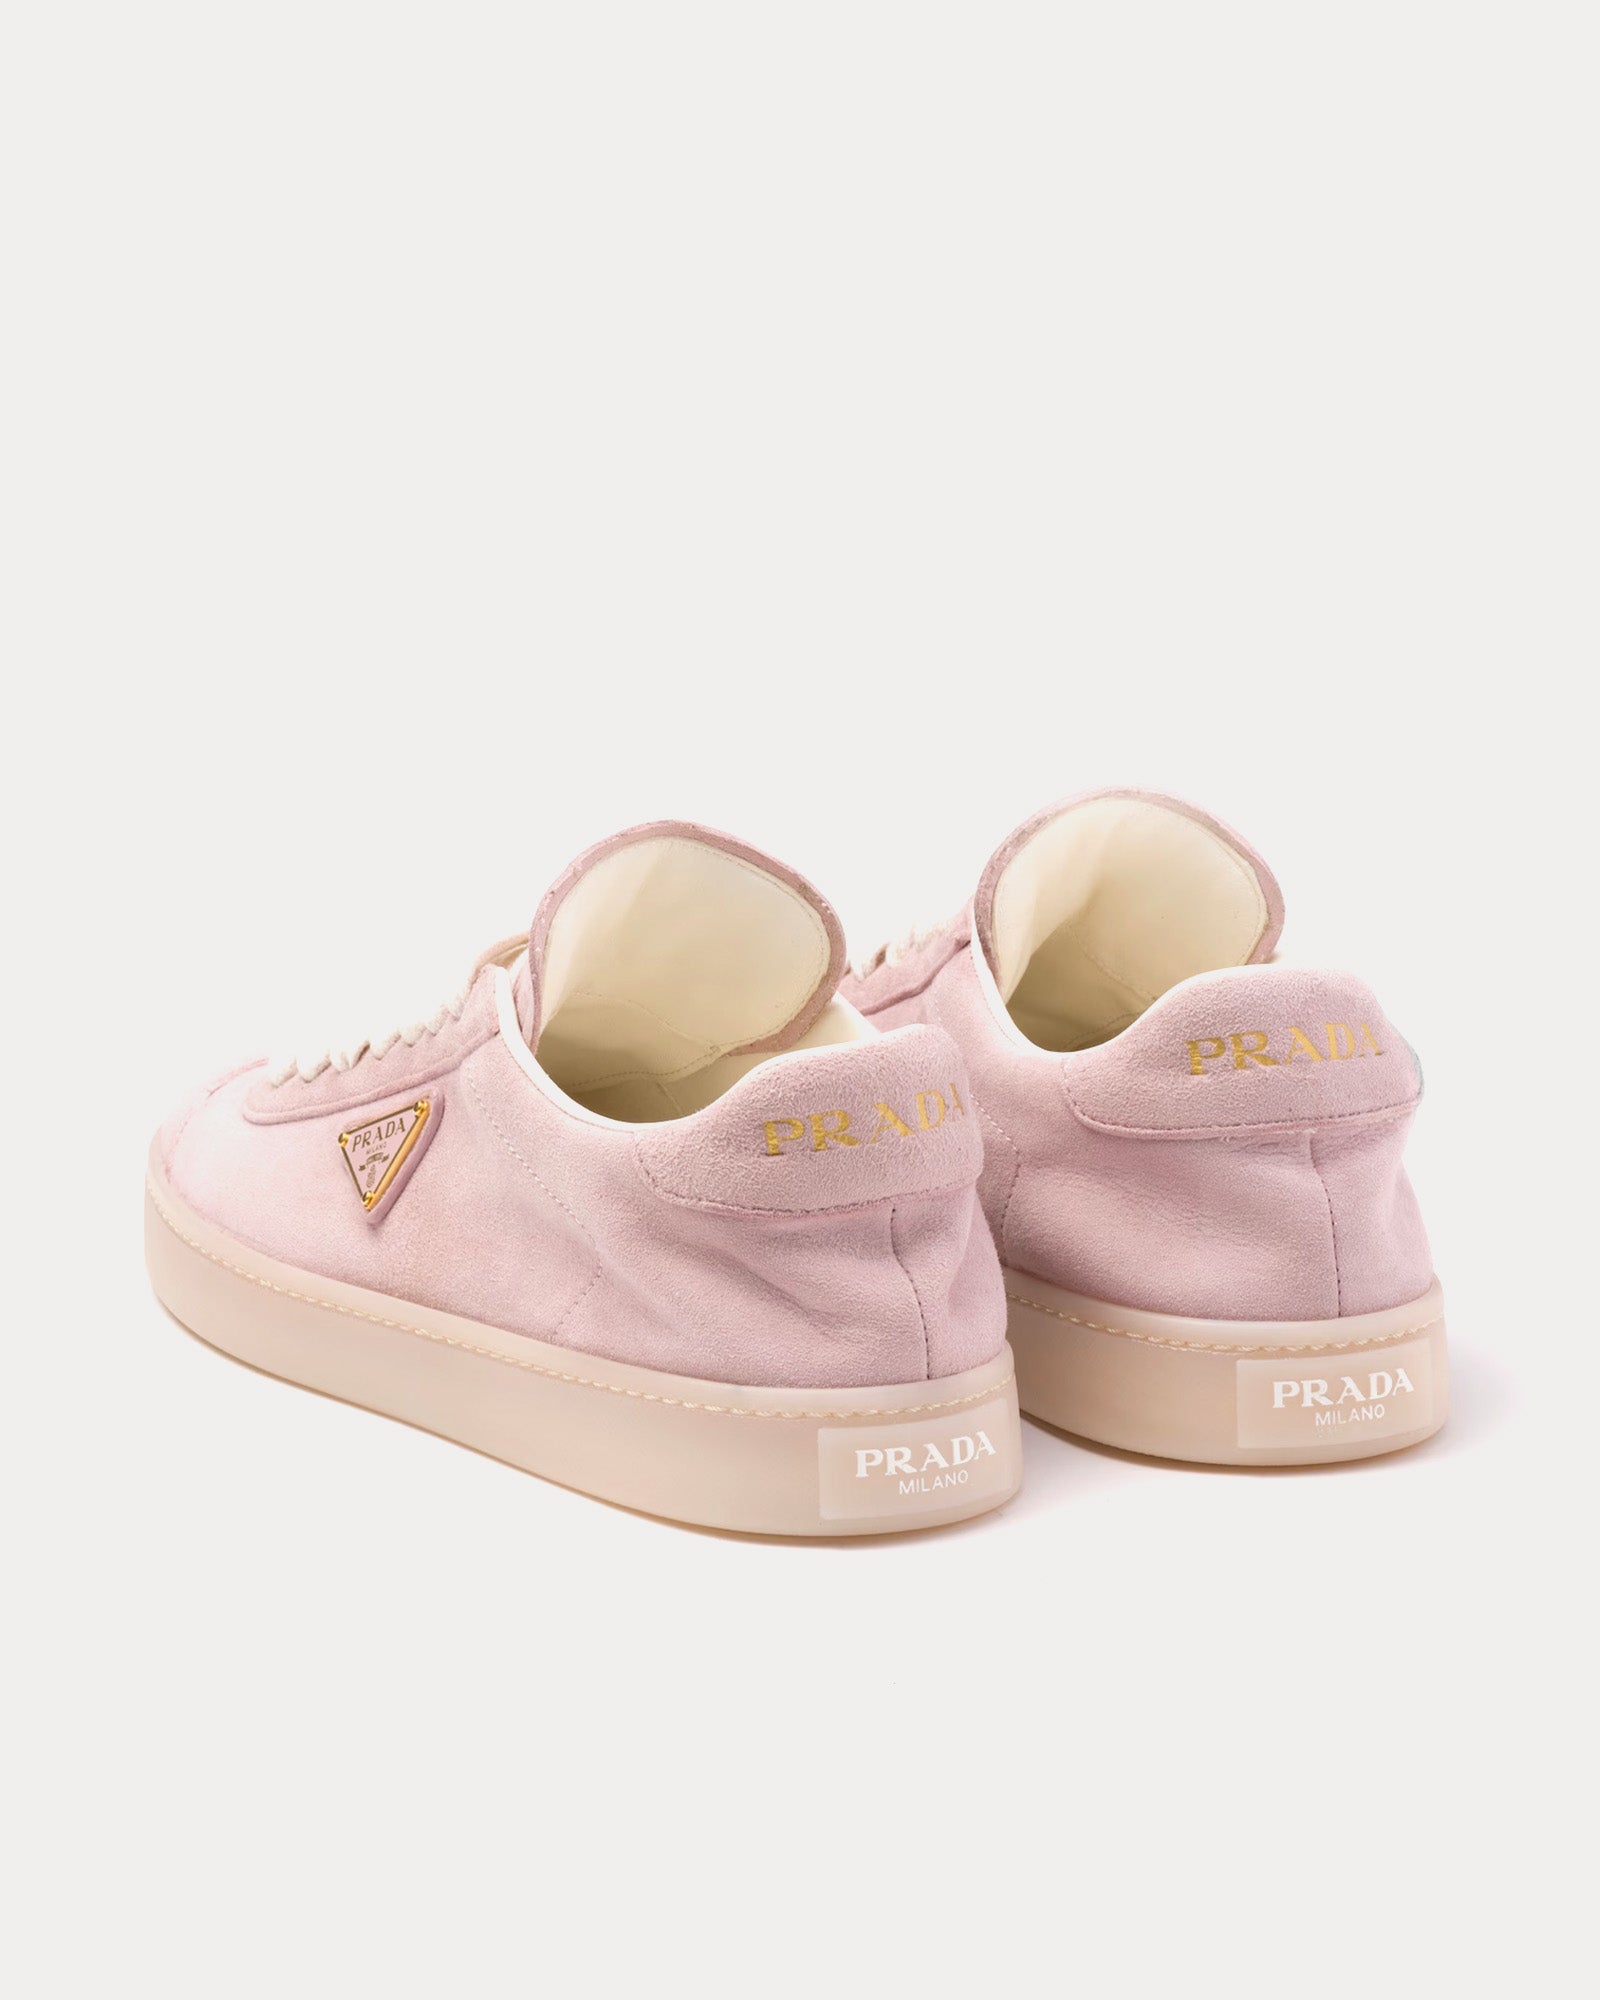 Prada - Lane Suede Alabaster Pink Low Top Sneakers